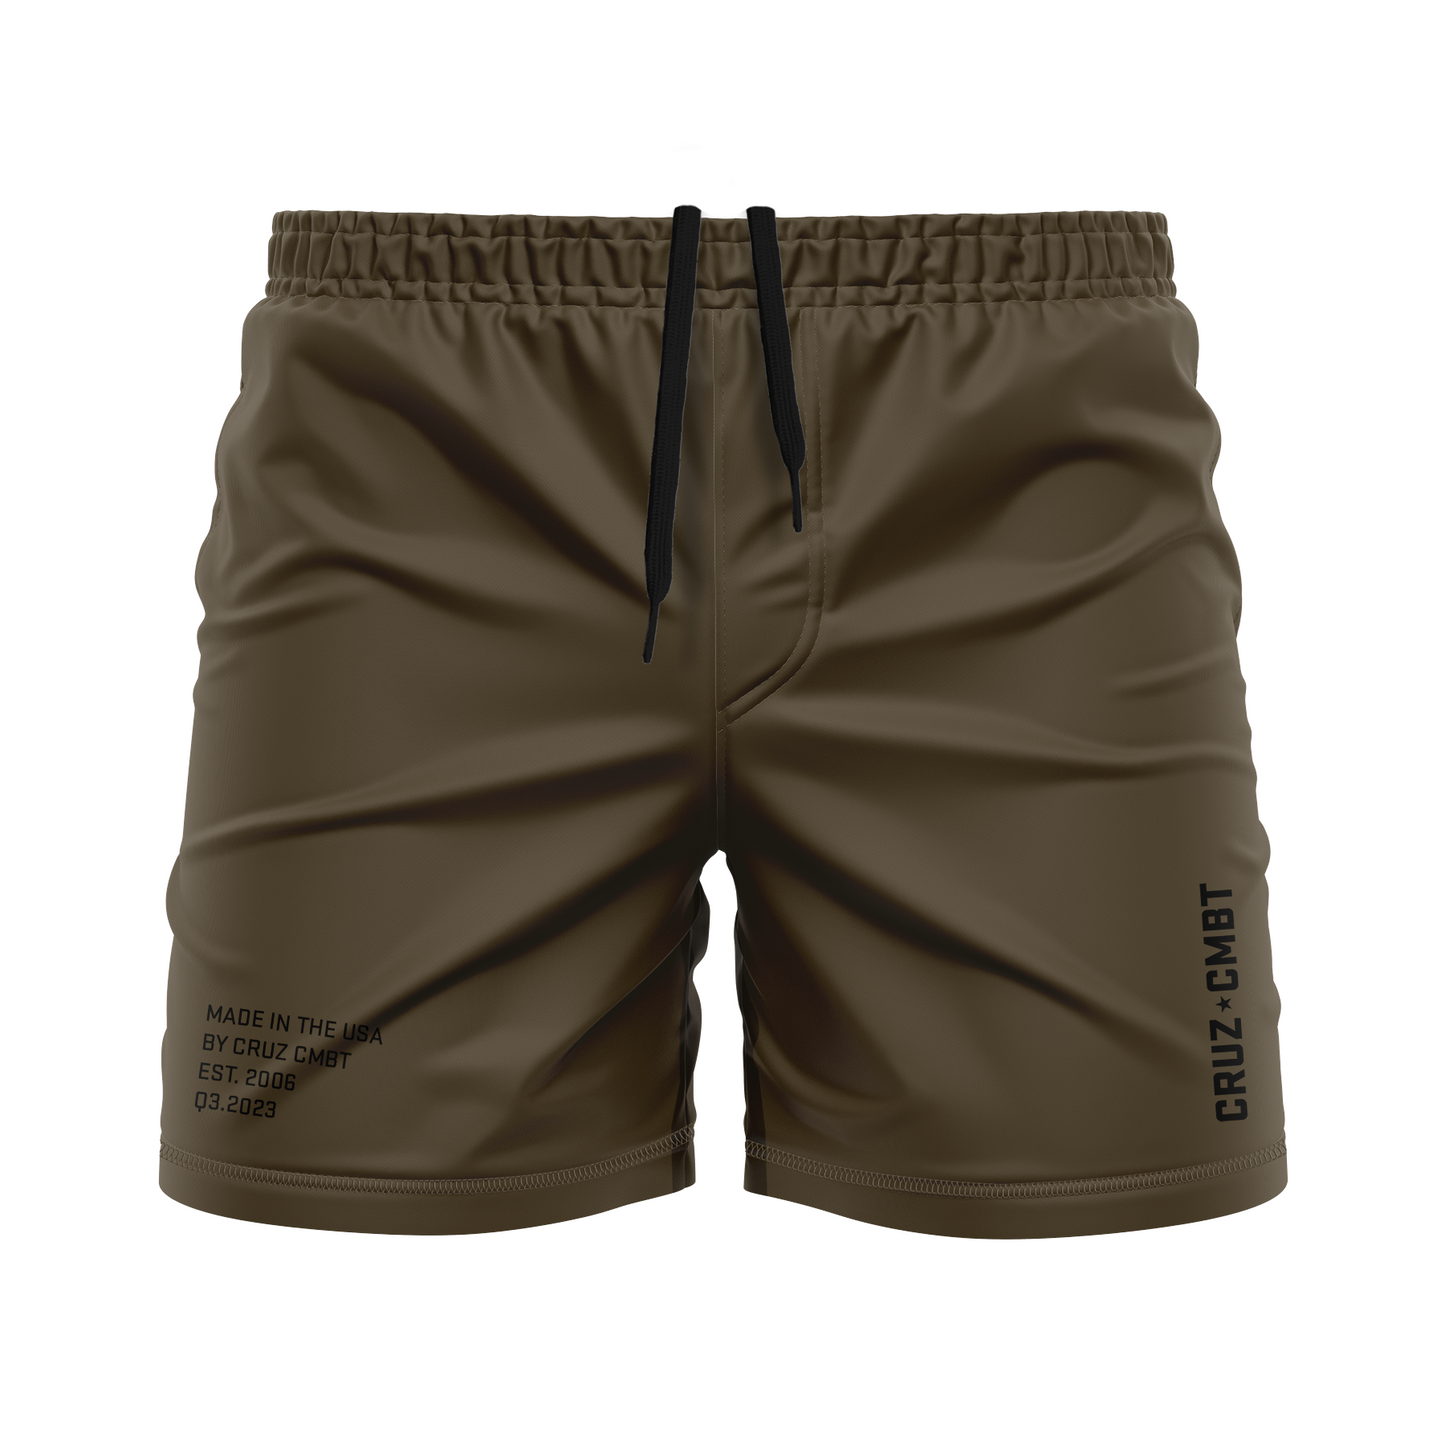 Base Collection men's FC shorts, MAS grey